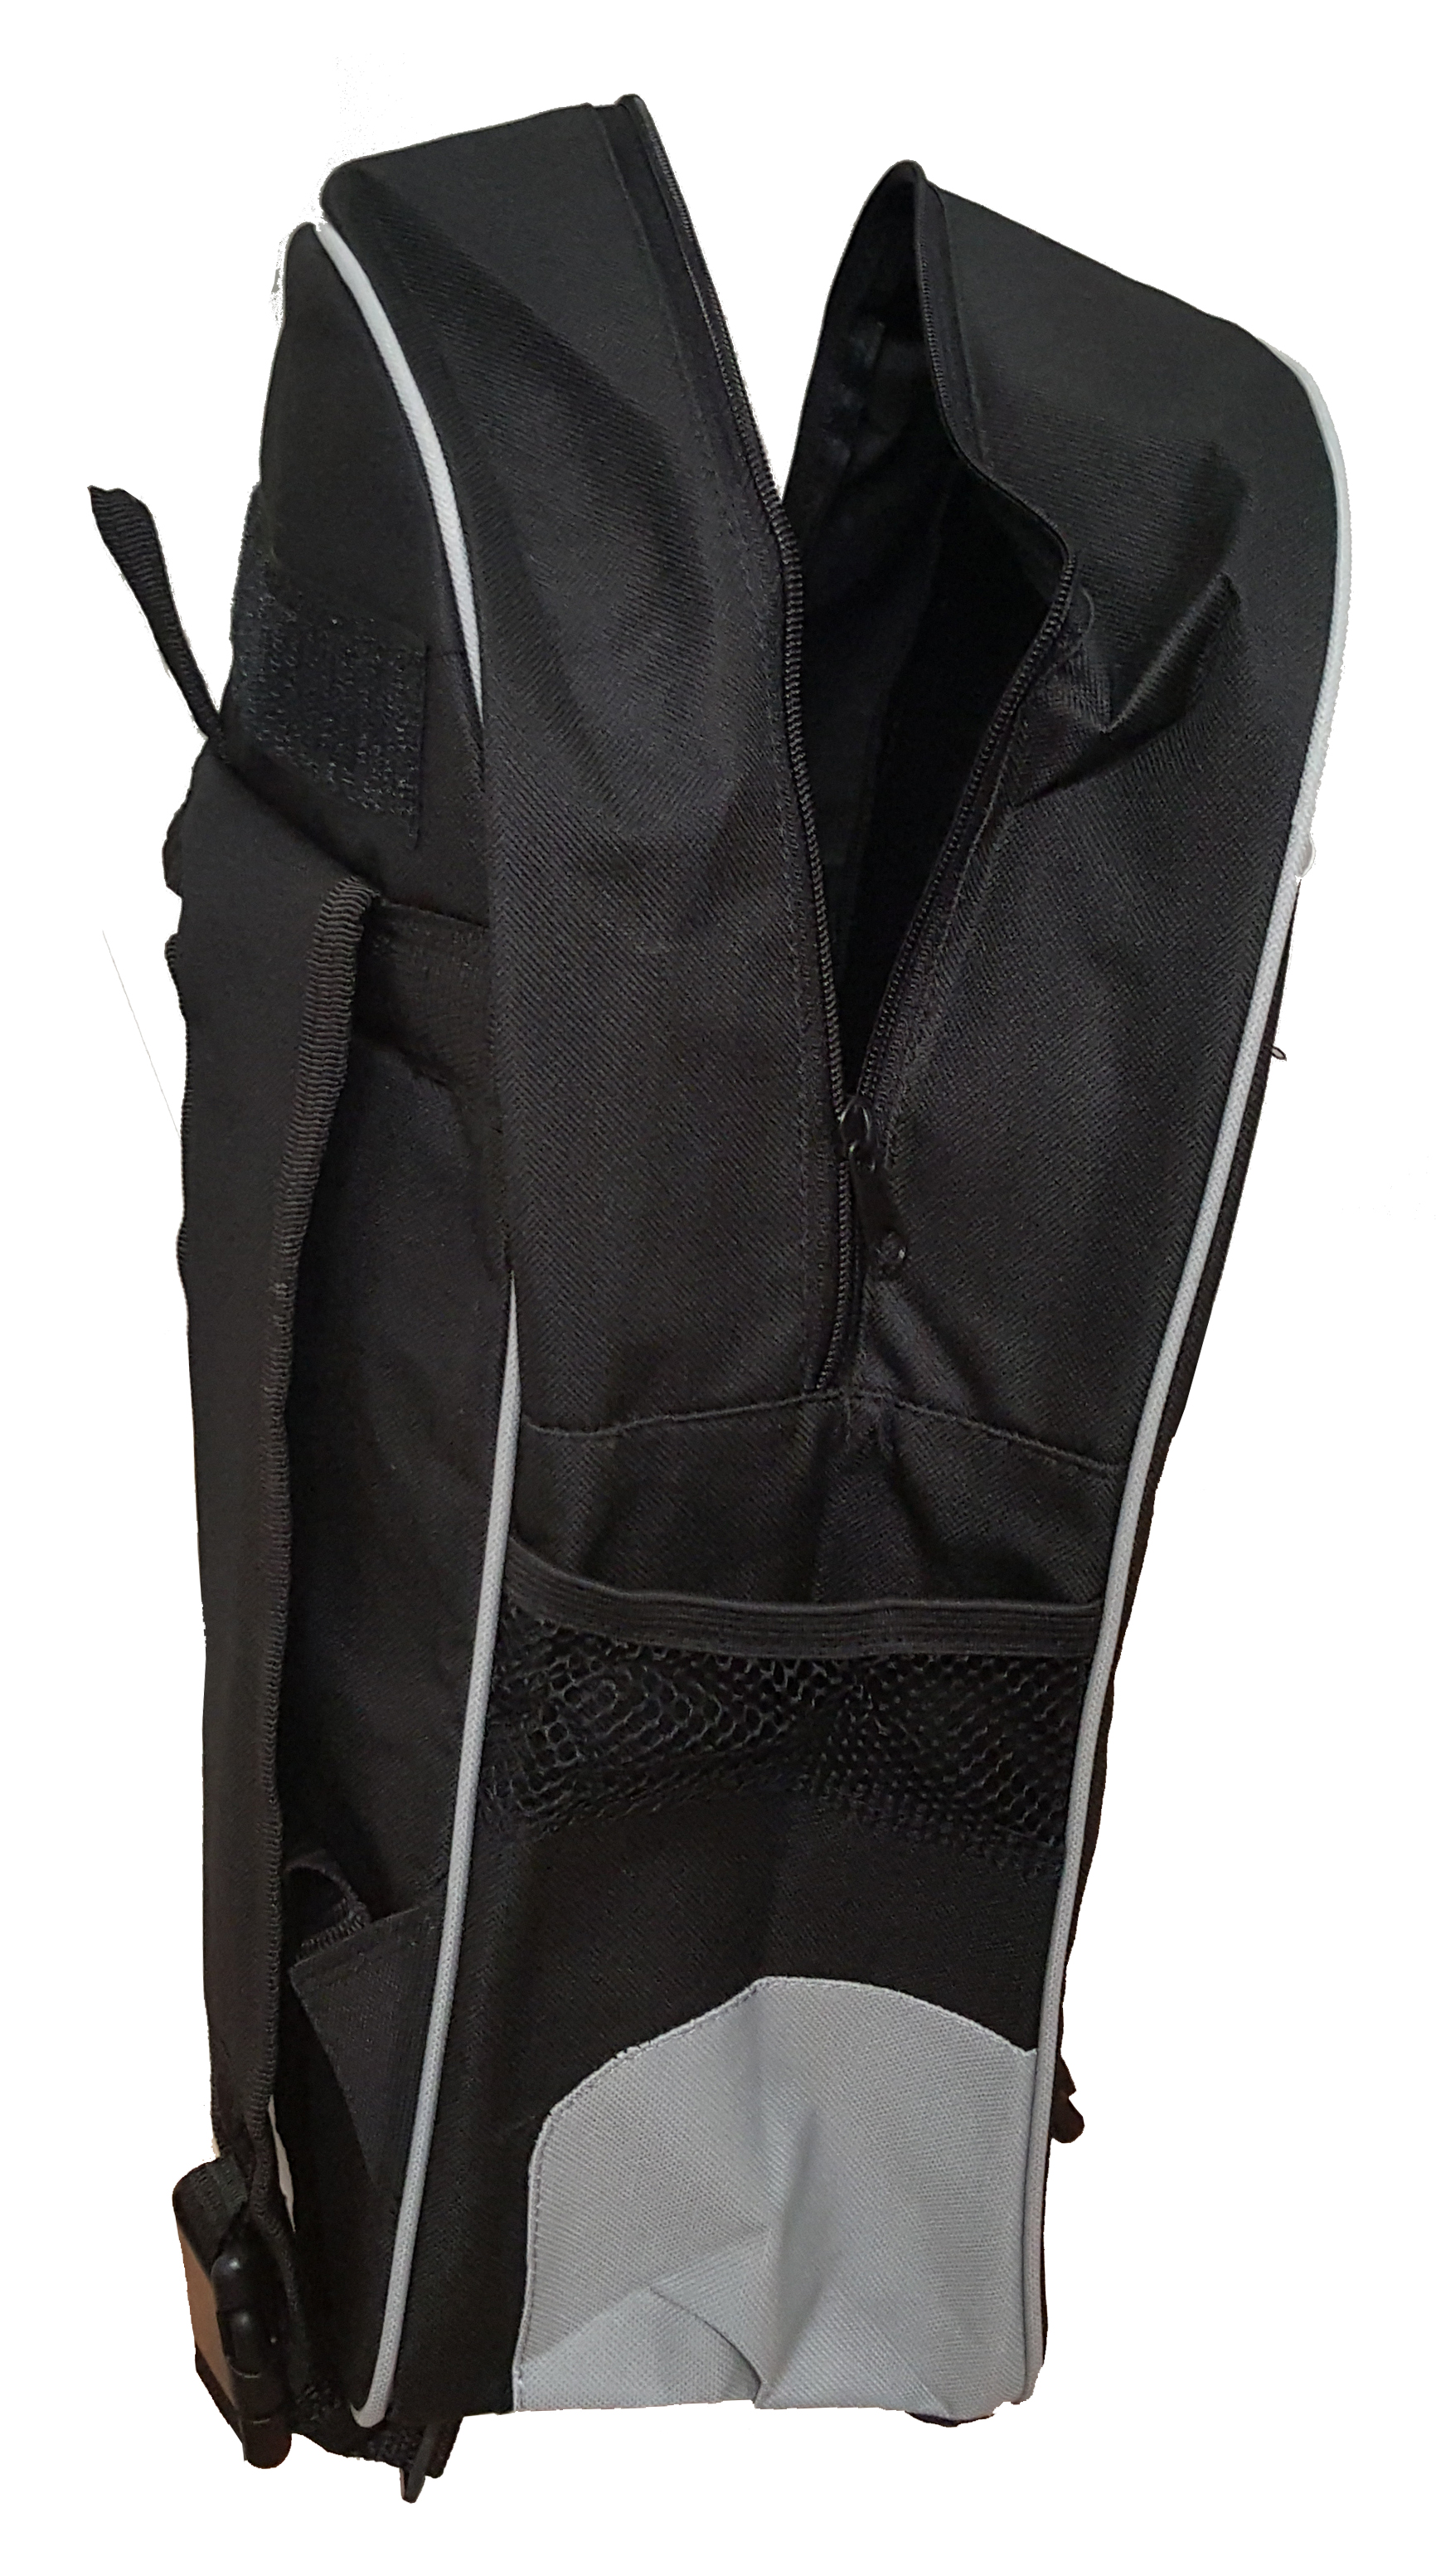 School Backpacks Variety in Black - Choose From 24 Options - image 3 of 3